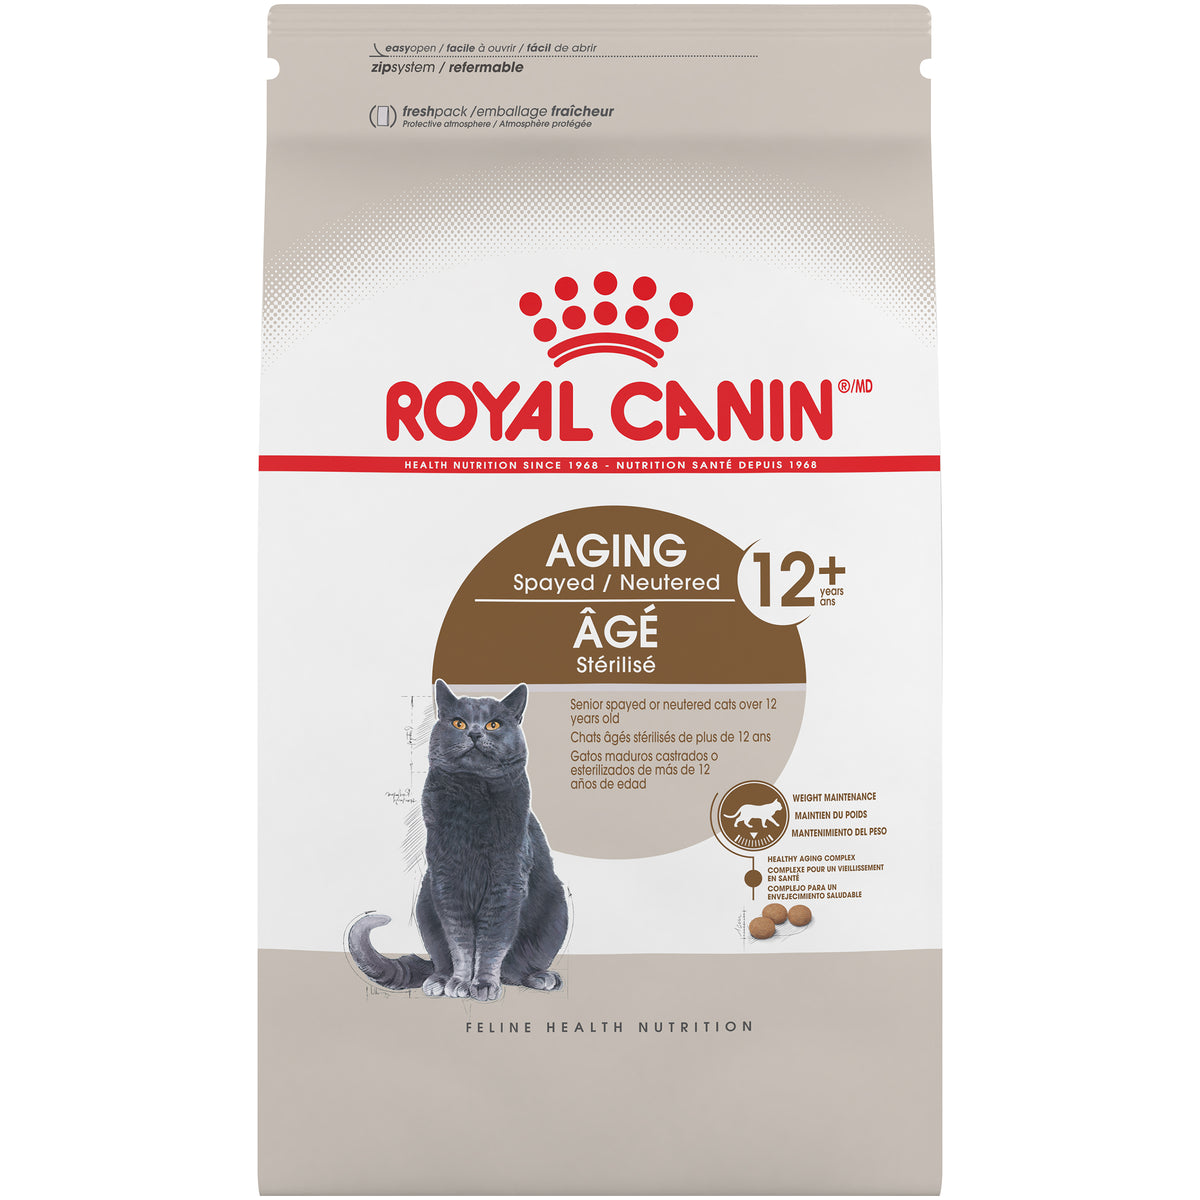 Royal Canin® Feline Health Nutrition™ Aging Spayed / Neutered 12+ Dry Cat Food, 7 lb